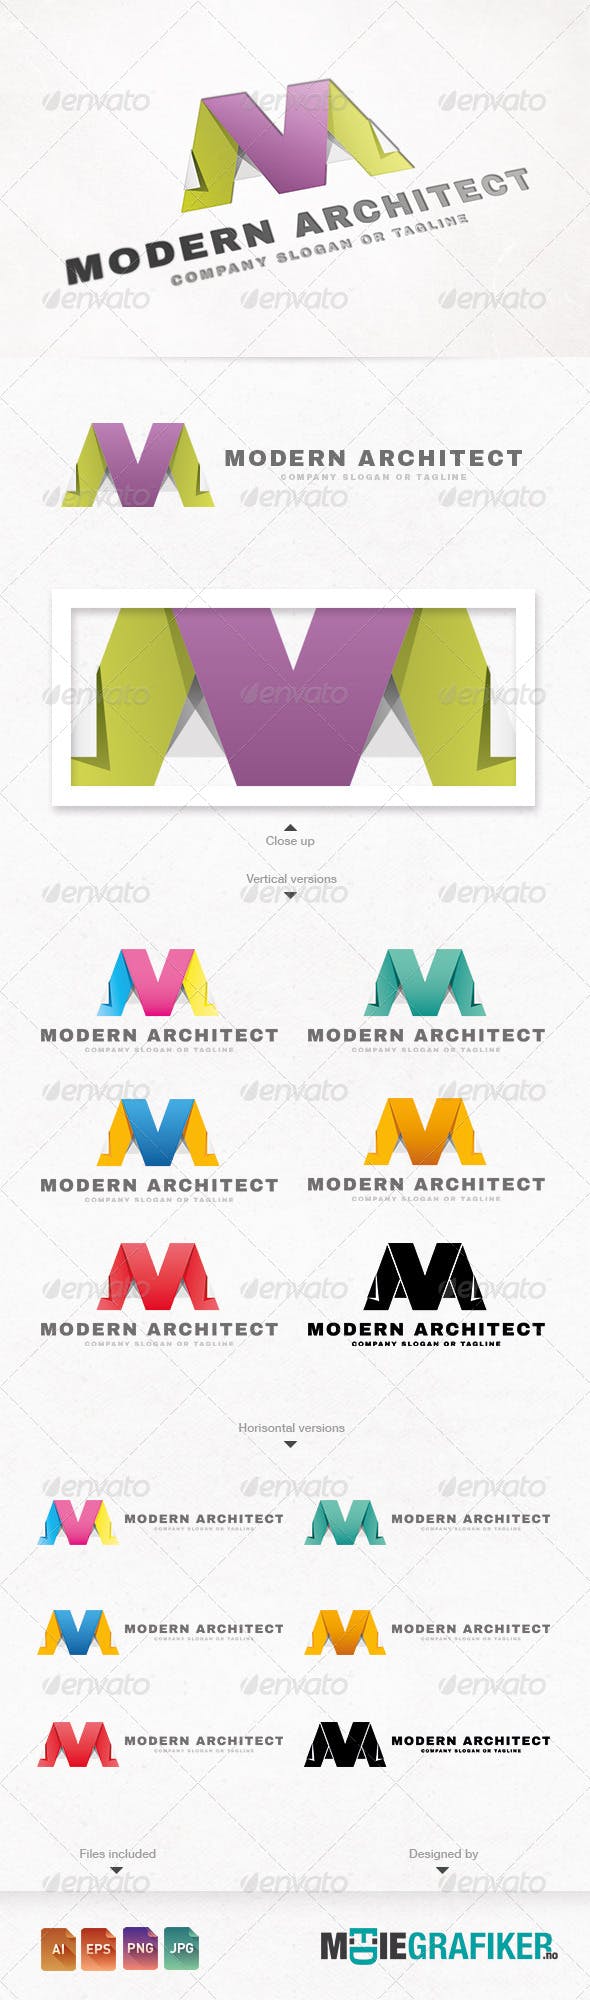 Modern Architect Logo - Modern Architect Logo by Kim-David | GraphicRiver